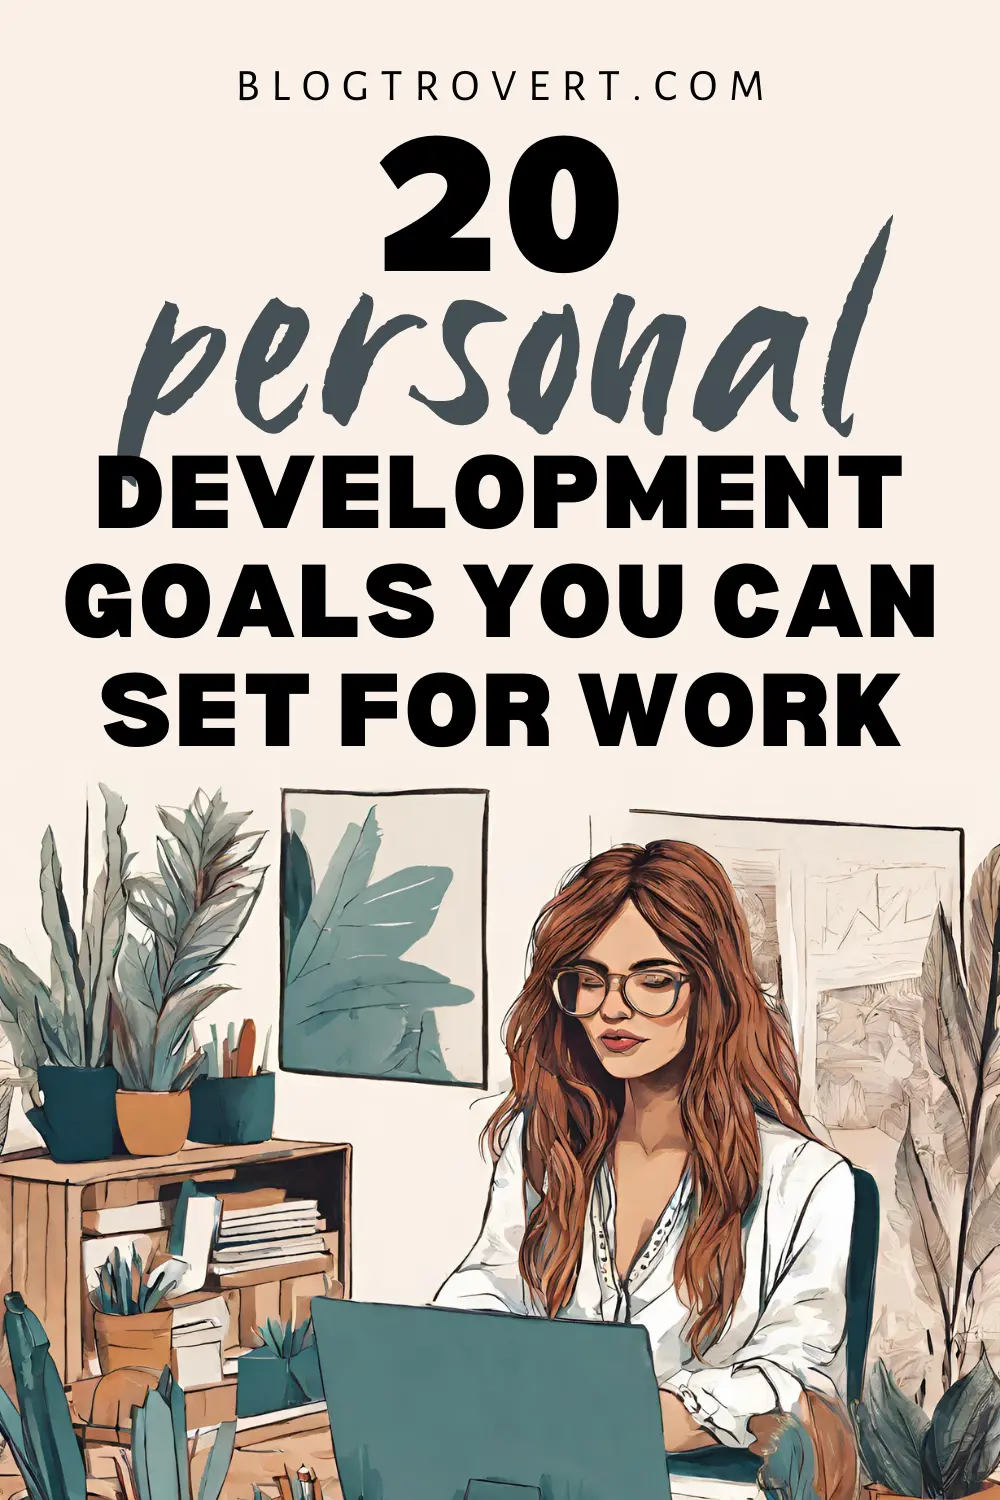 Personal development goals for work